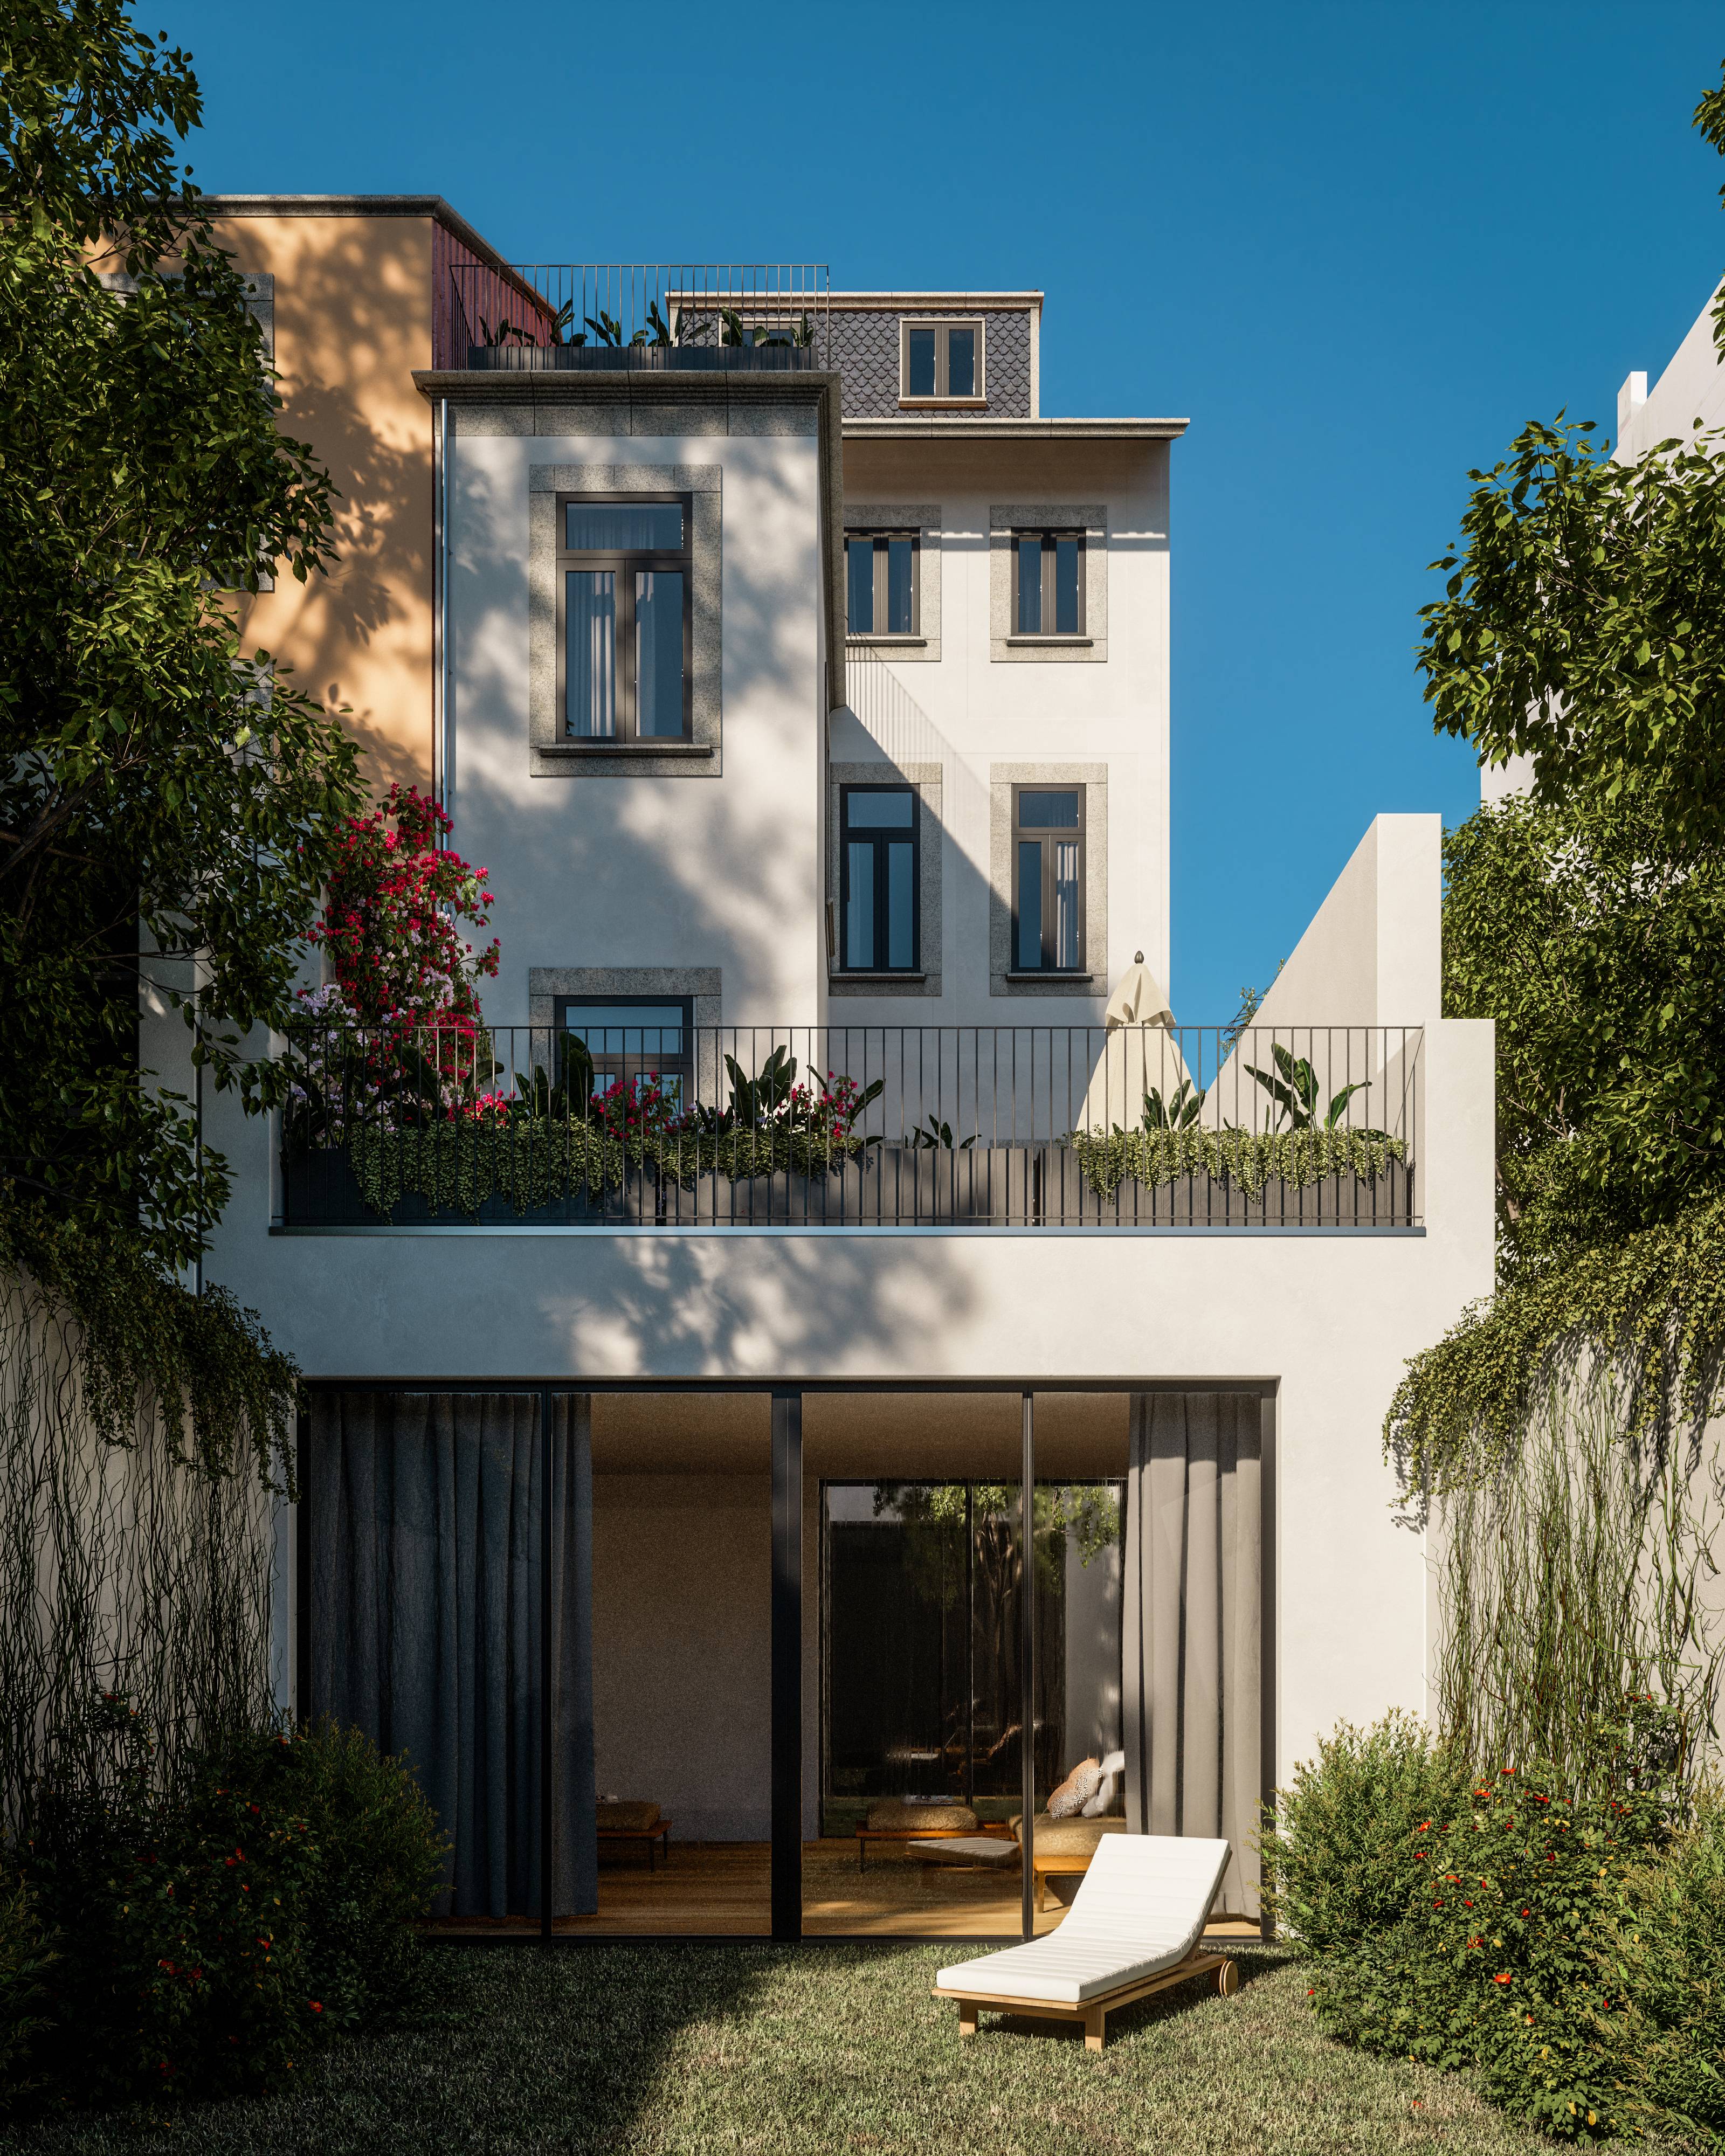 The Duke’s House - Art Inspired 1 bedroom apartment in Porto’s Downtown, Portugal.